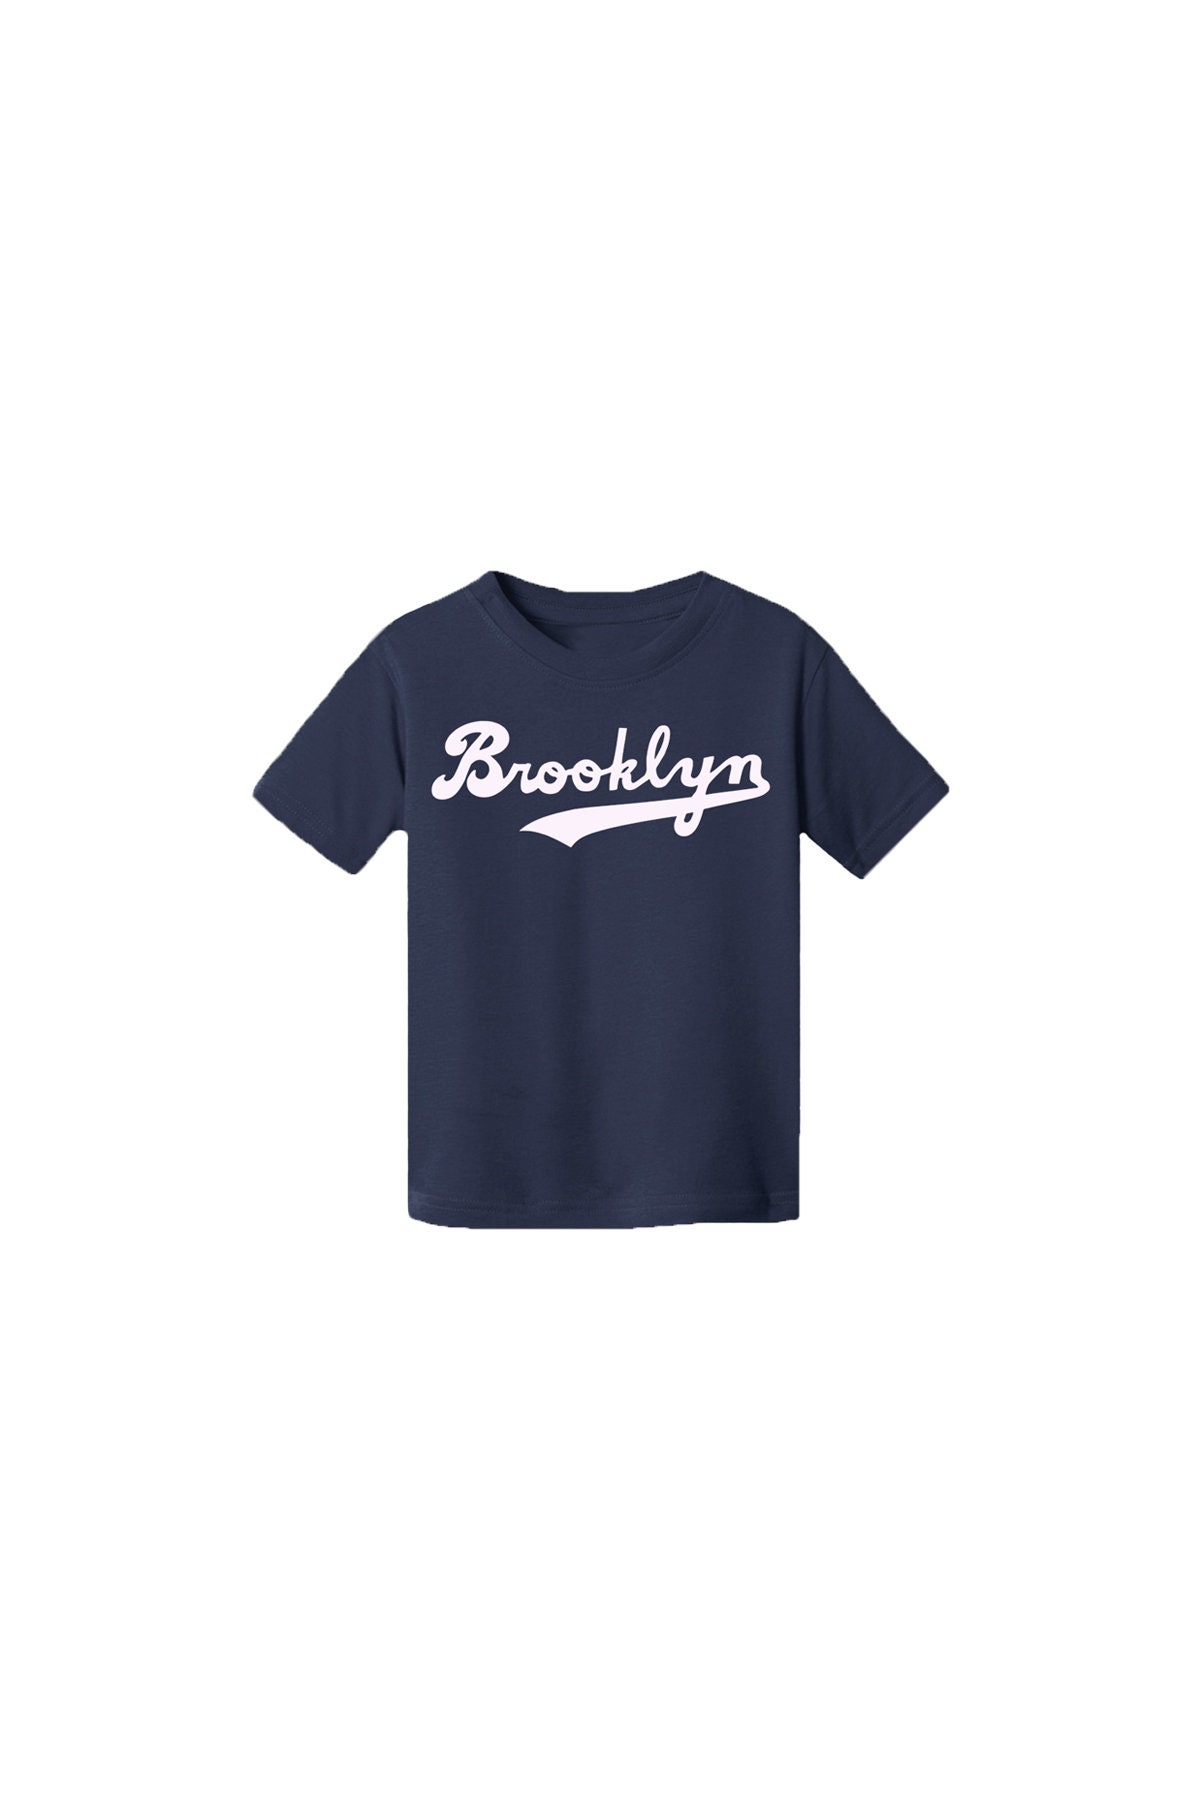 Men's Brooklyn Dodgers Nike Black Jackie Robinson Day Legend T-Shirt